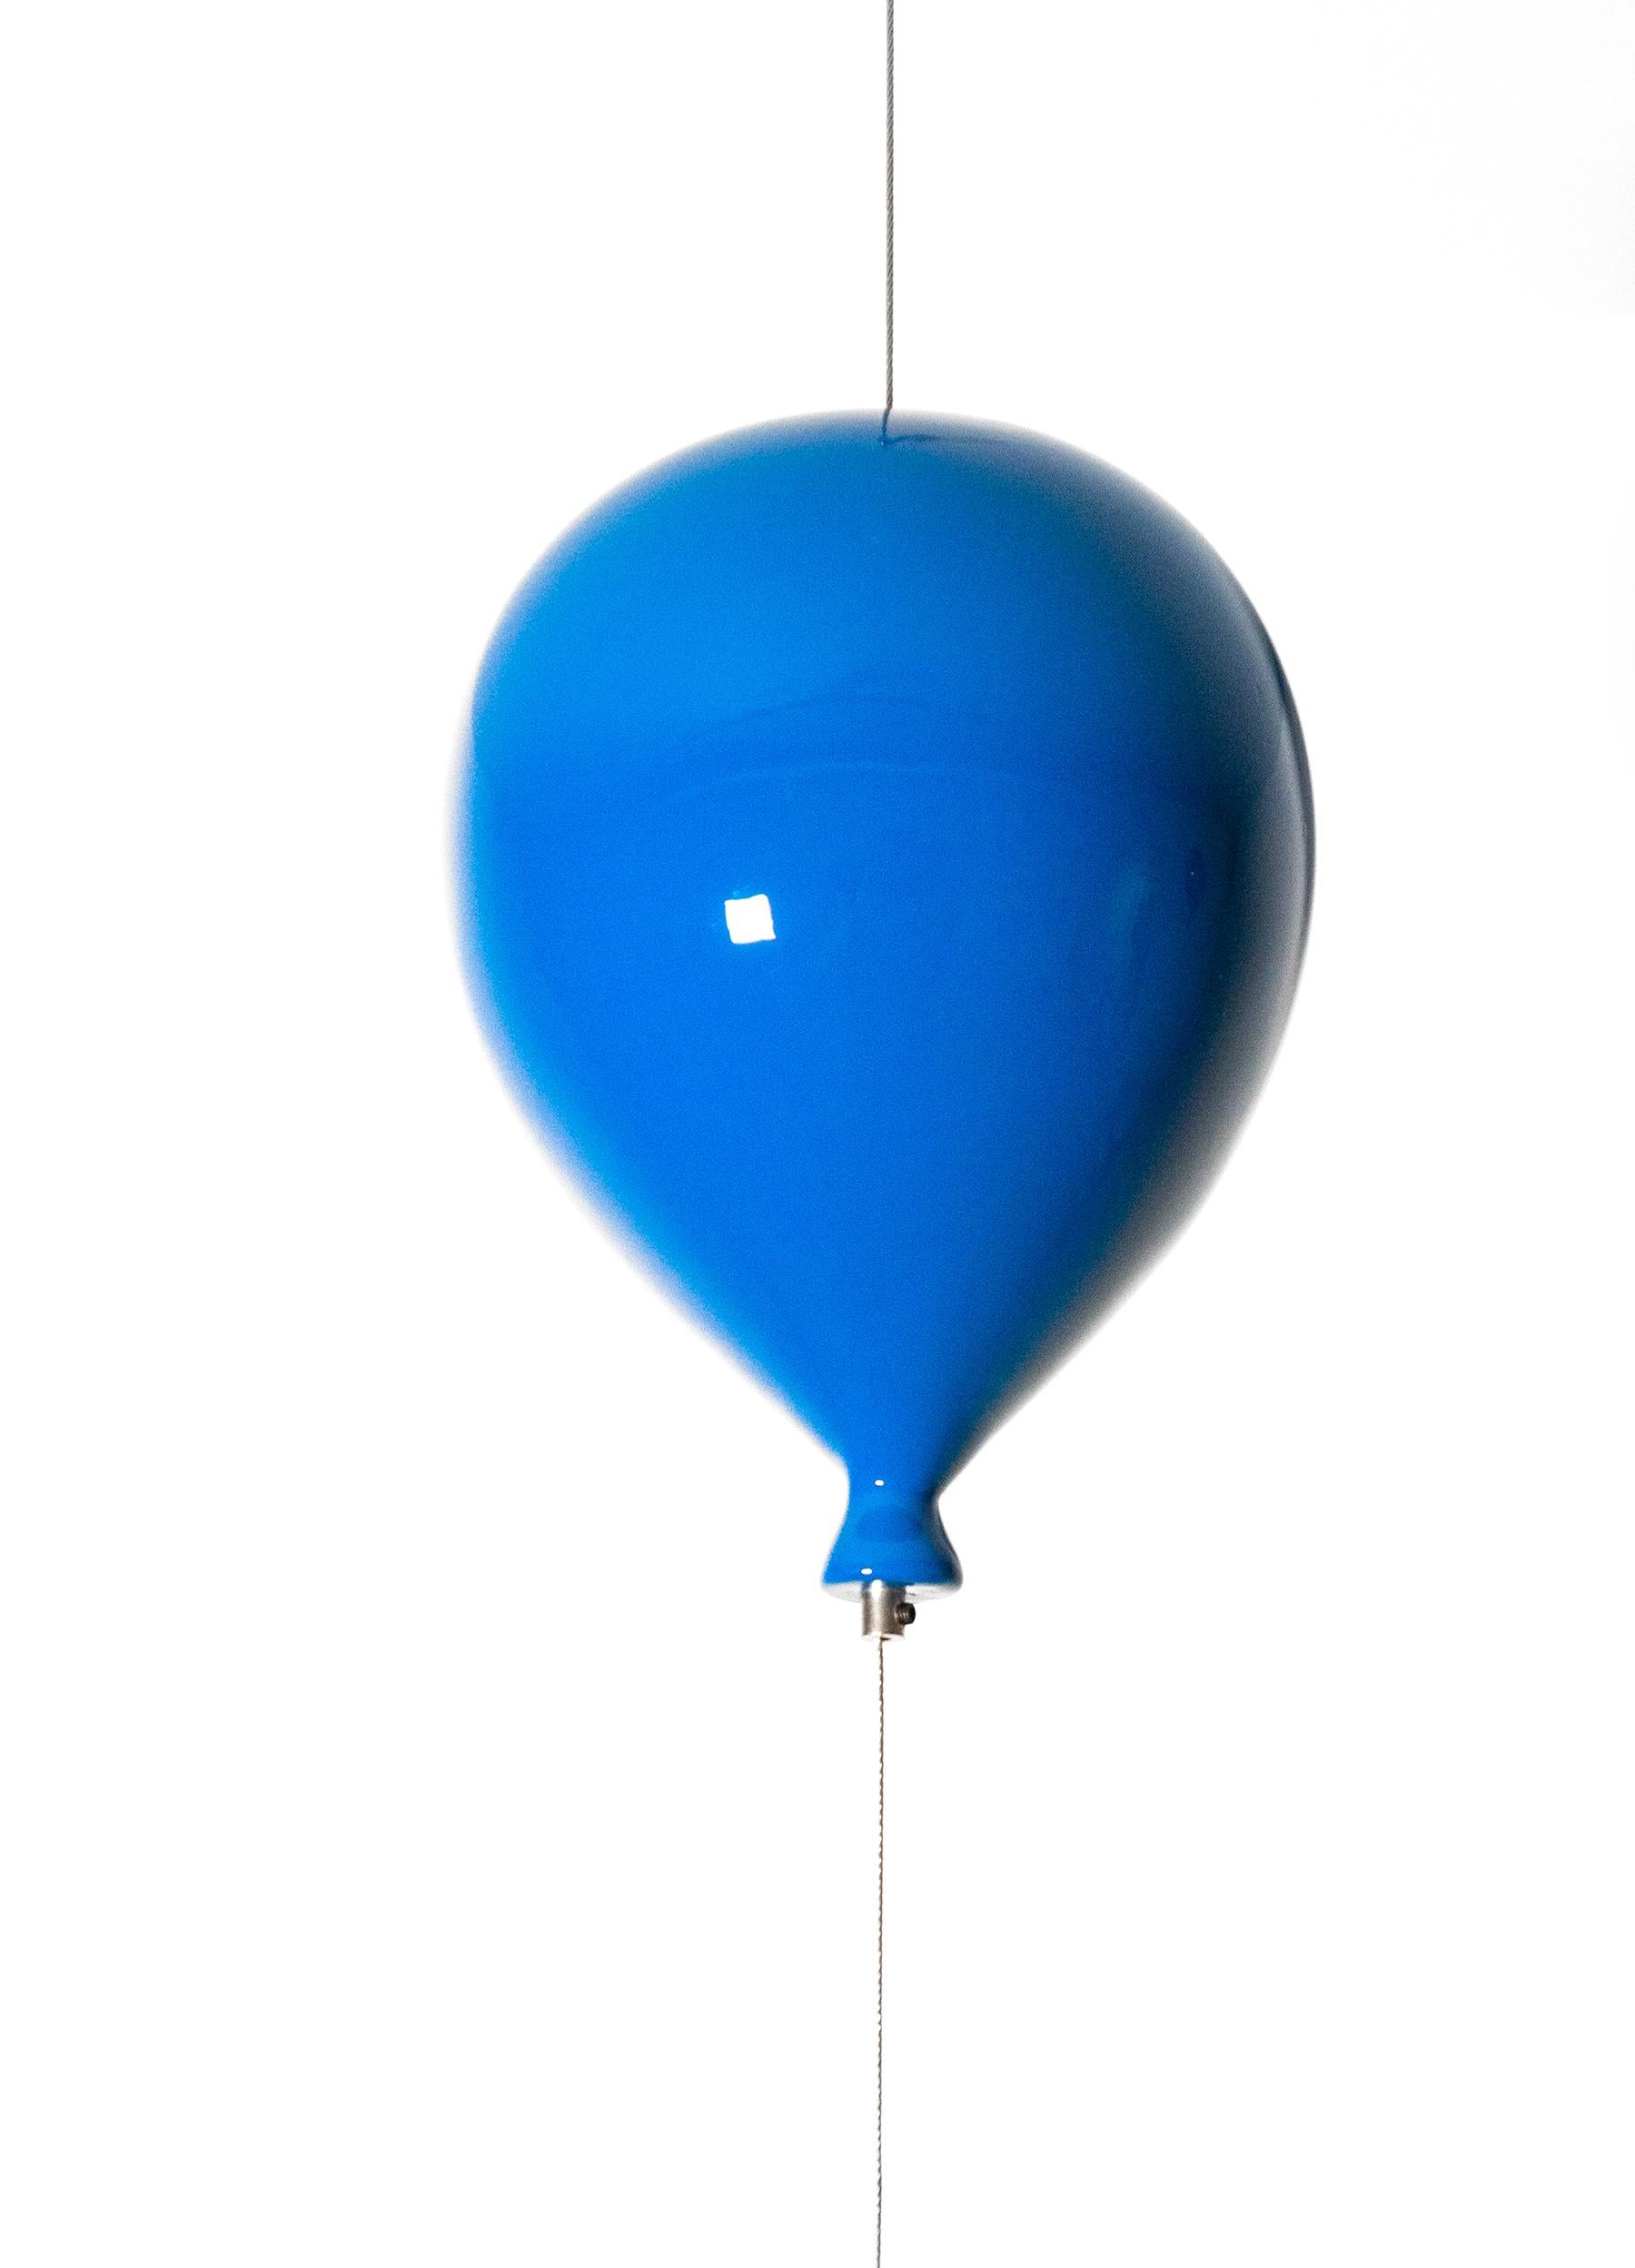 Abandon - woman, figurative, blue balloon, suspended steel sculpture 1